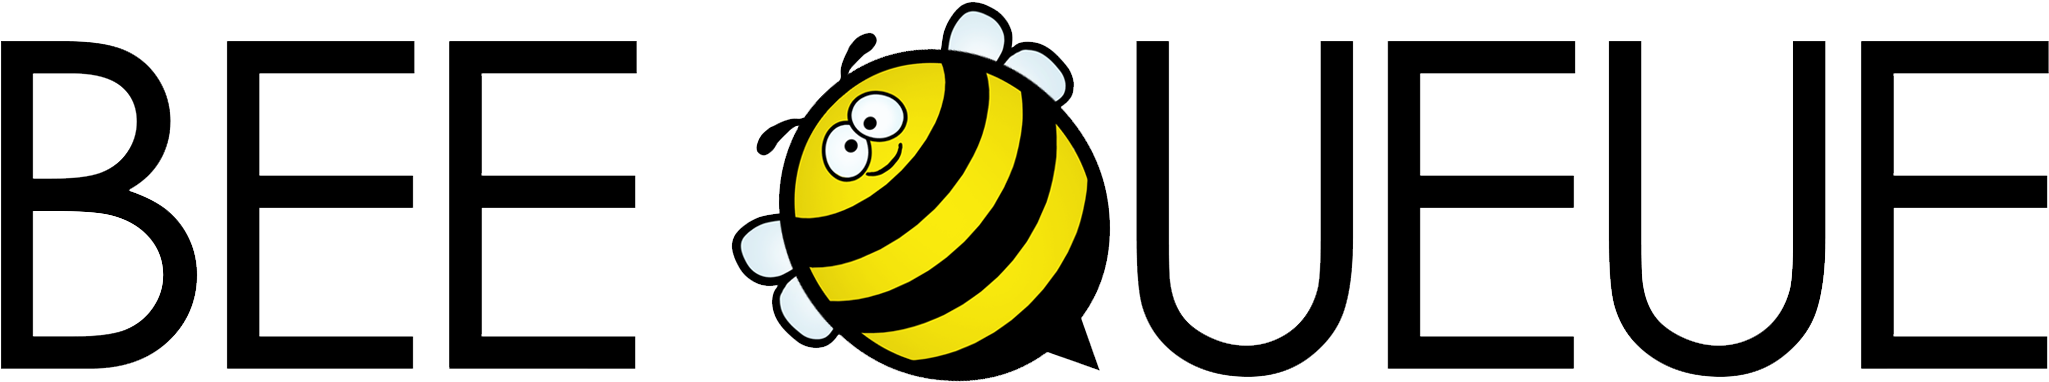 Bee-queue Logo - Bee Queue Clipart (2207x450), Png Download